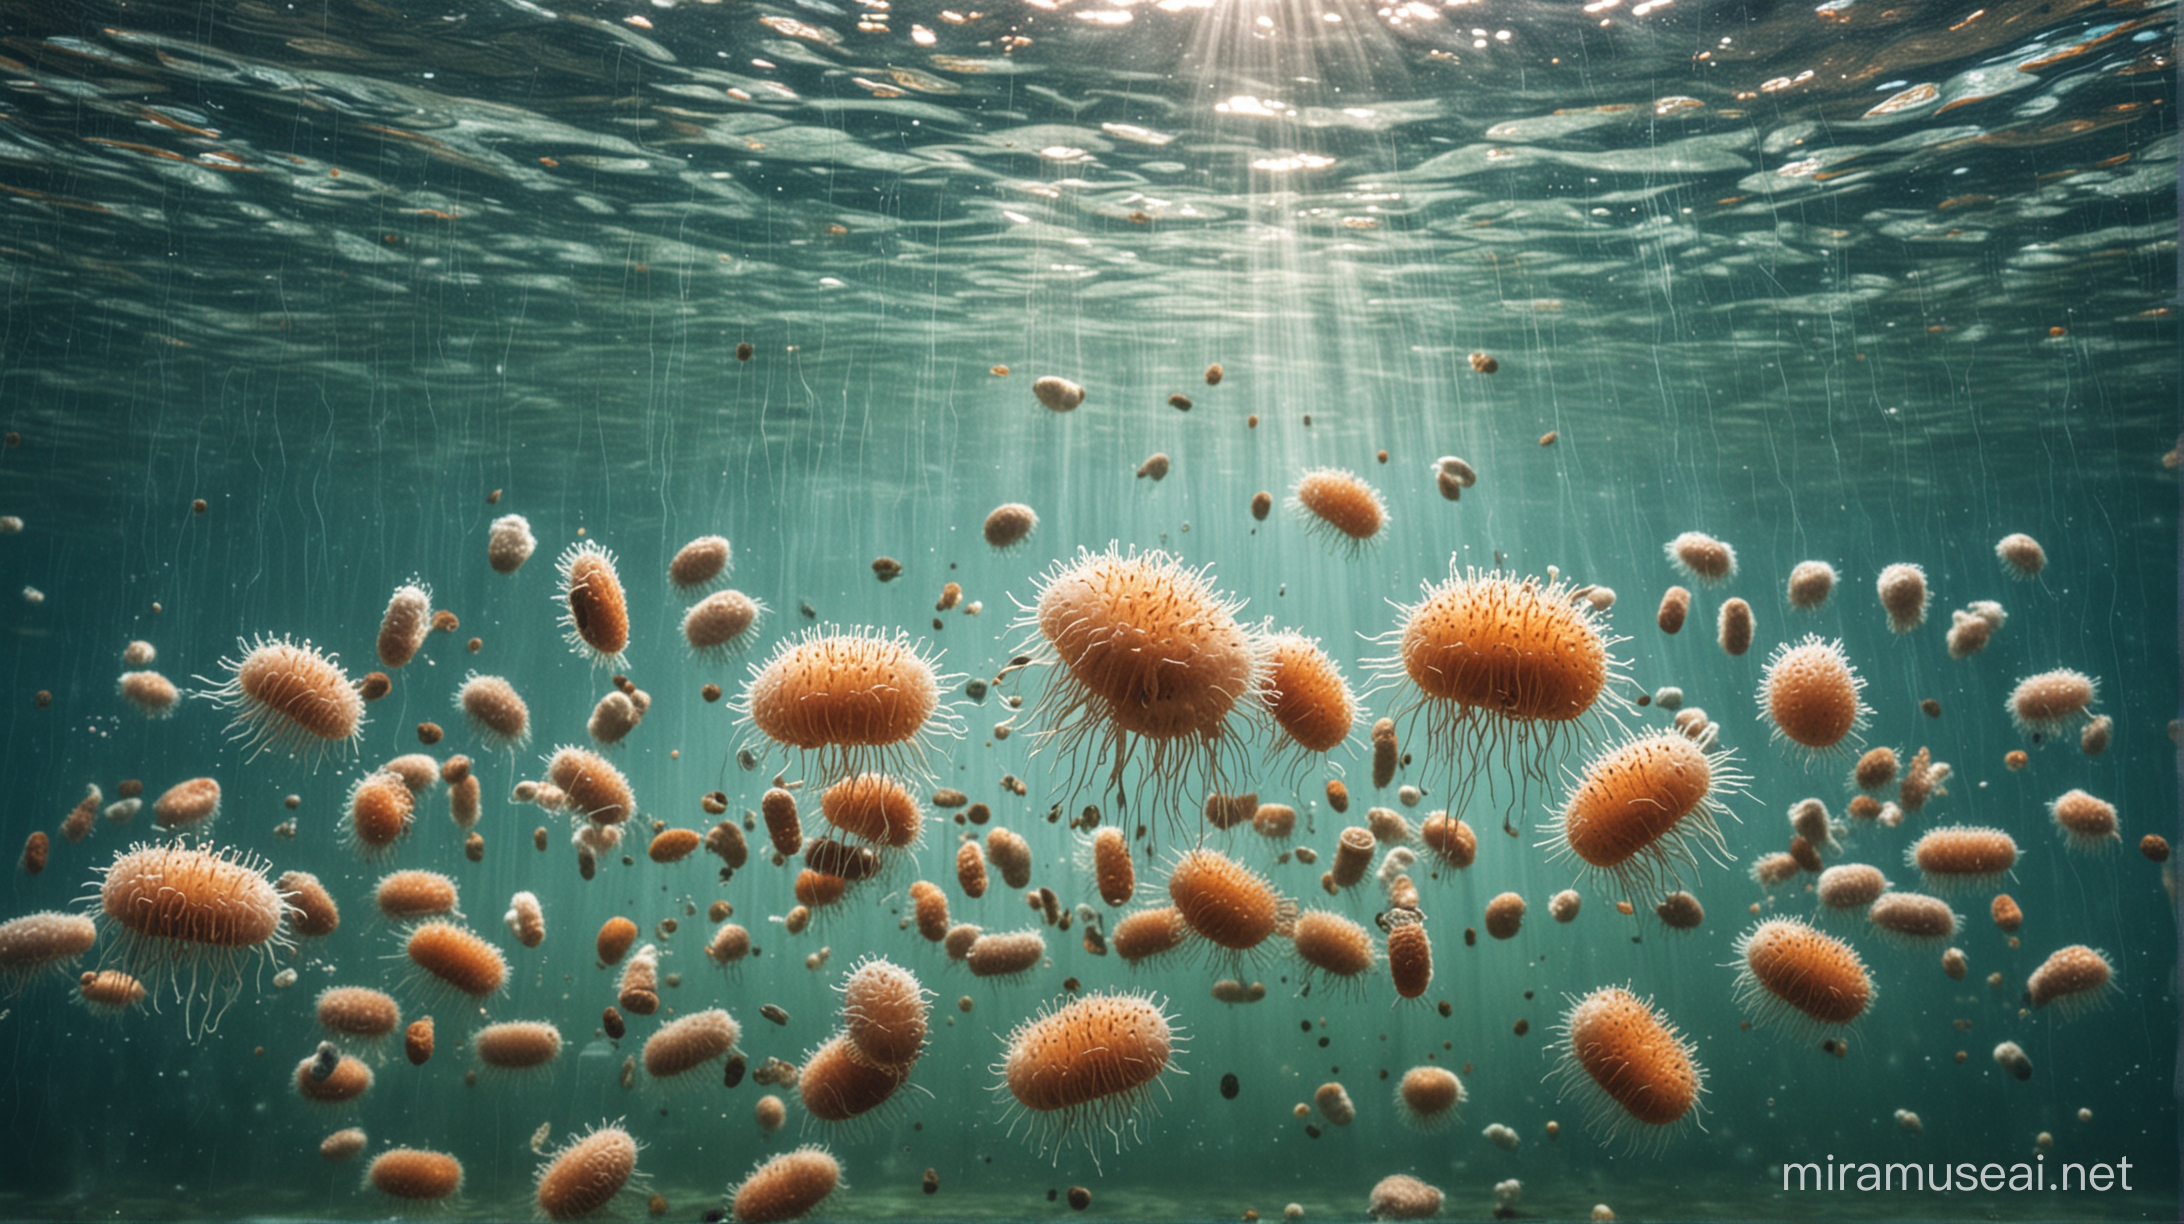 Microorganism Life in Aquatic Environment